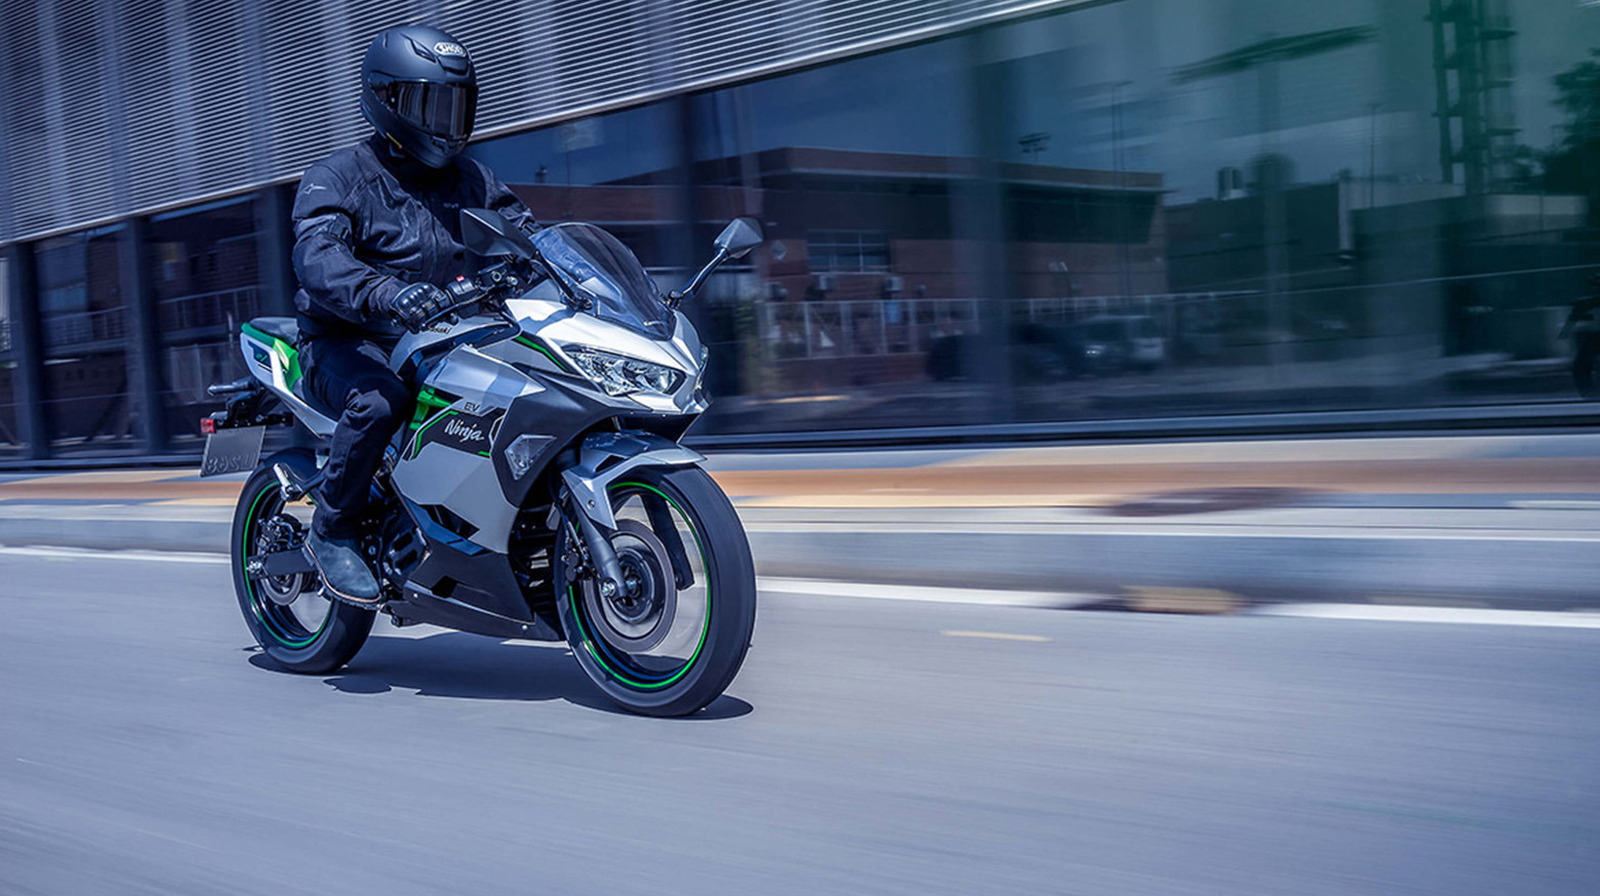 All About The Kawasaki Ninja E-1 Motorcycle